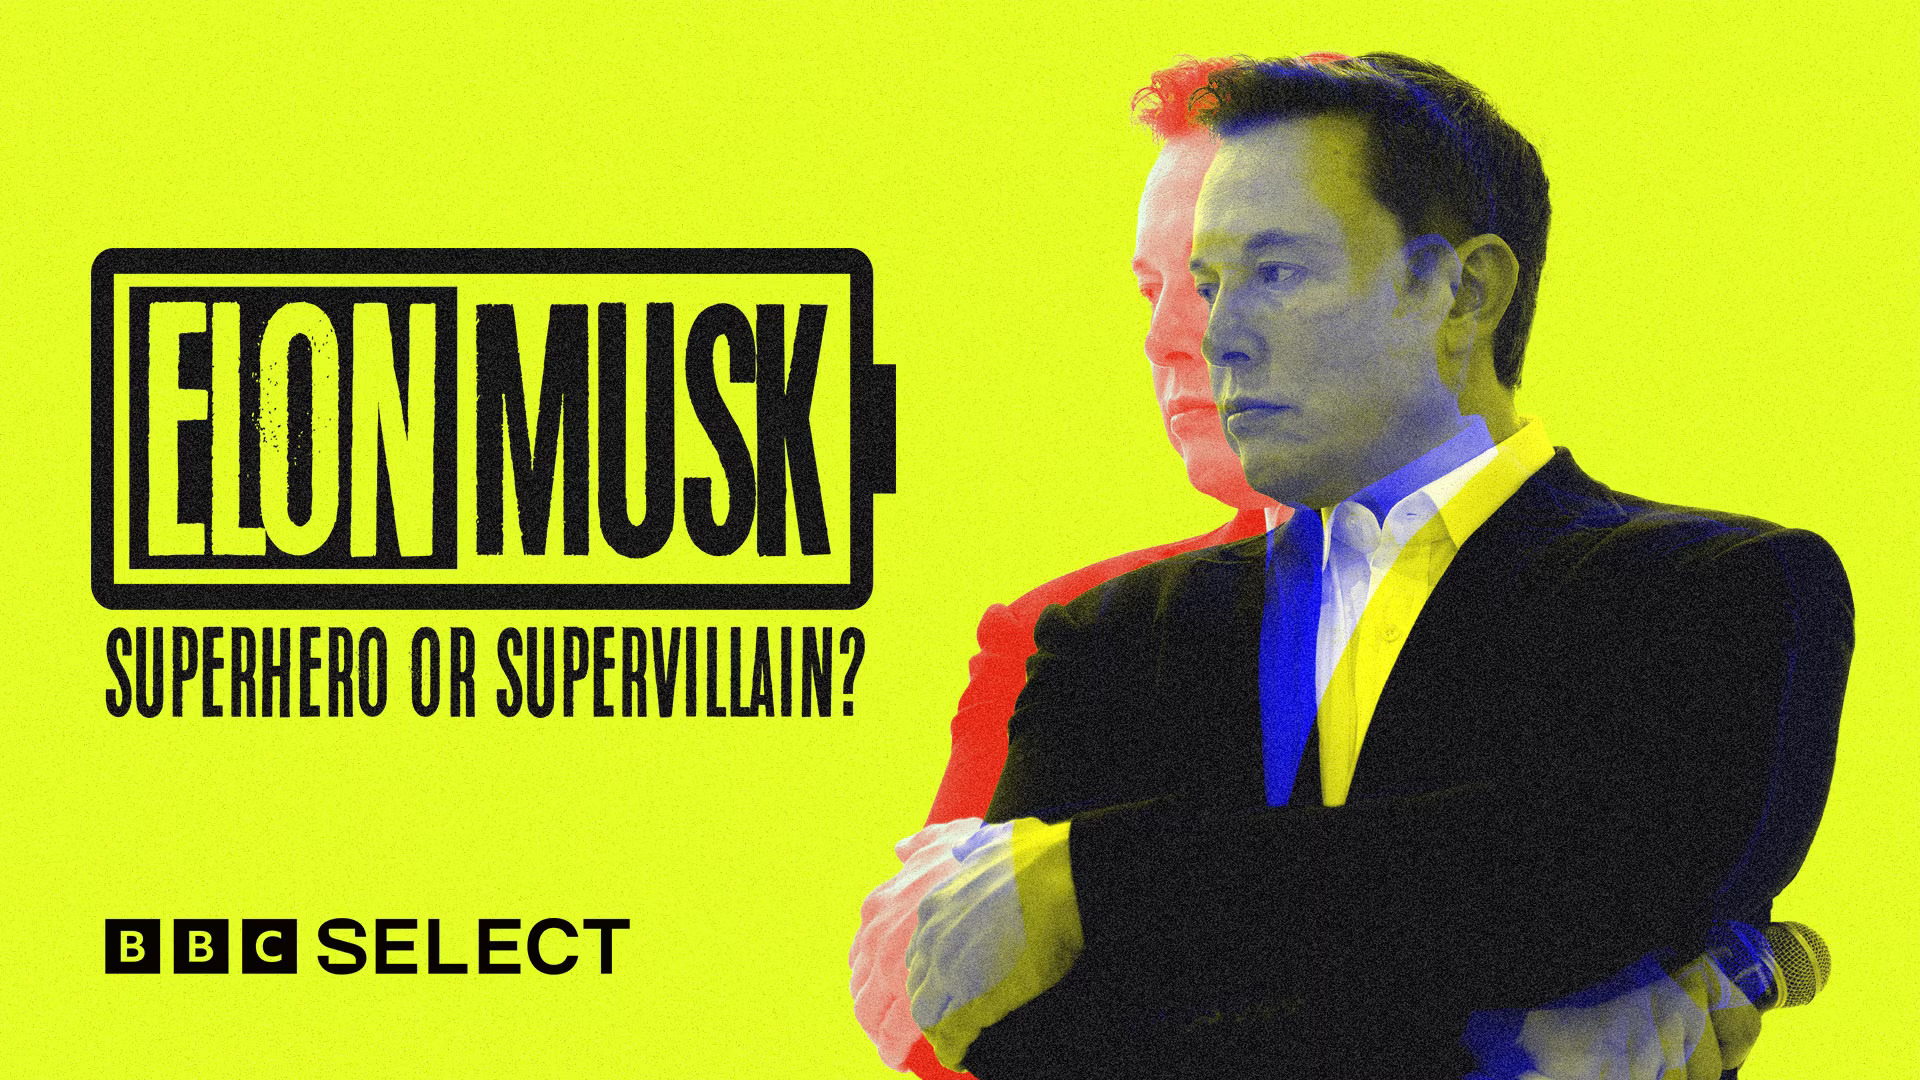 Elon_Musk_Superhero_or_Supervillain-_Website_cover_artwork_horizontal_1920x1080.jpg